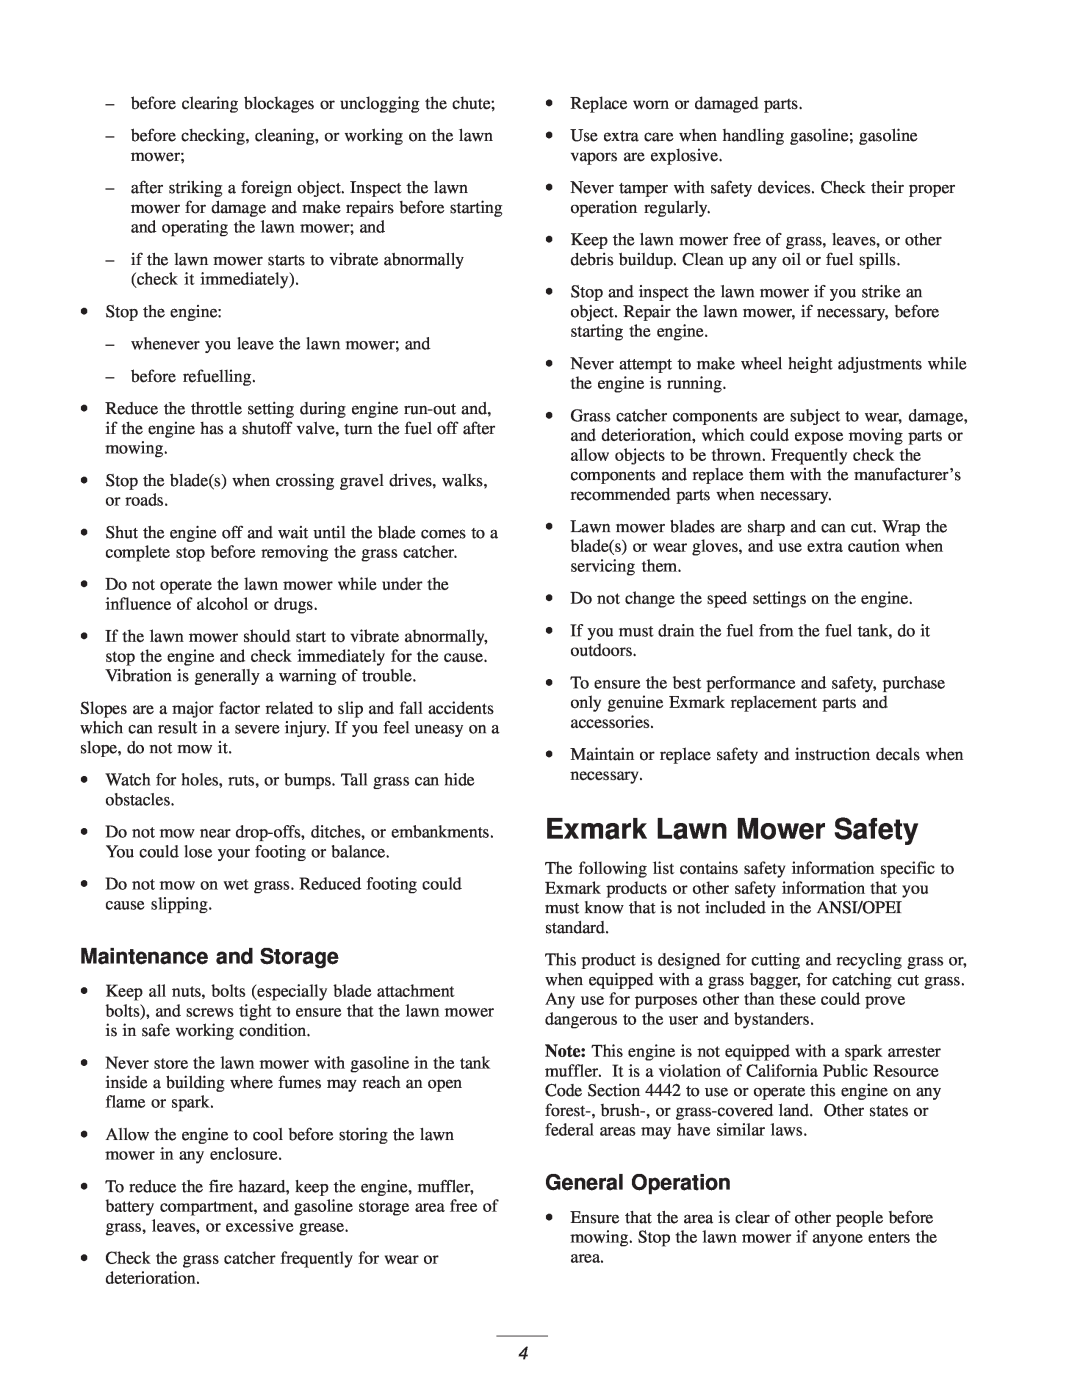 Exmark M216KA, M216KASP manual Exmark Lawn Mower Safety, Maintenance and Storage, General Operation 